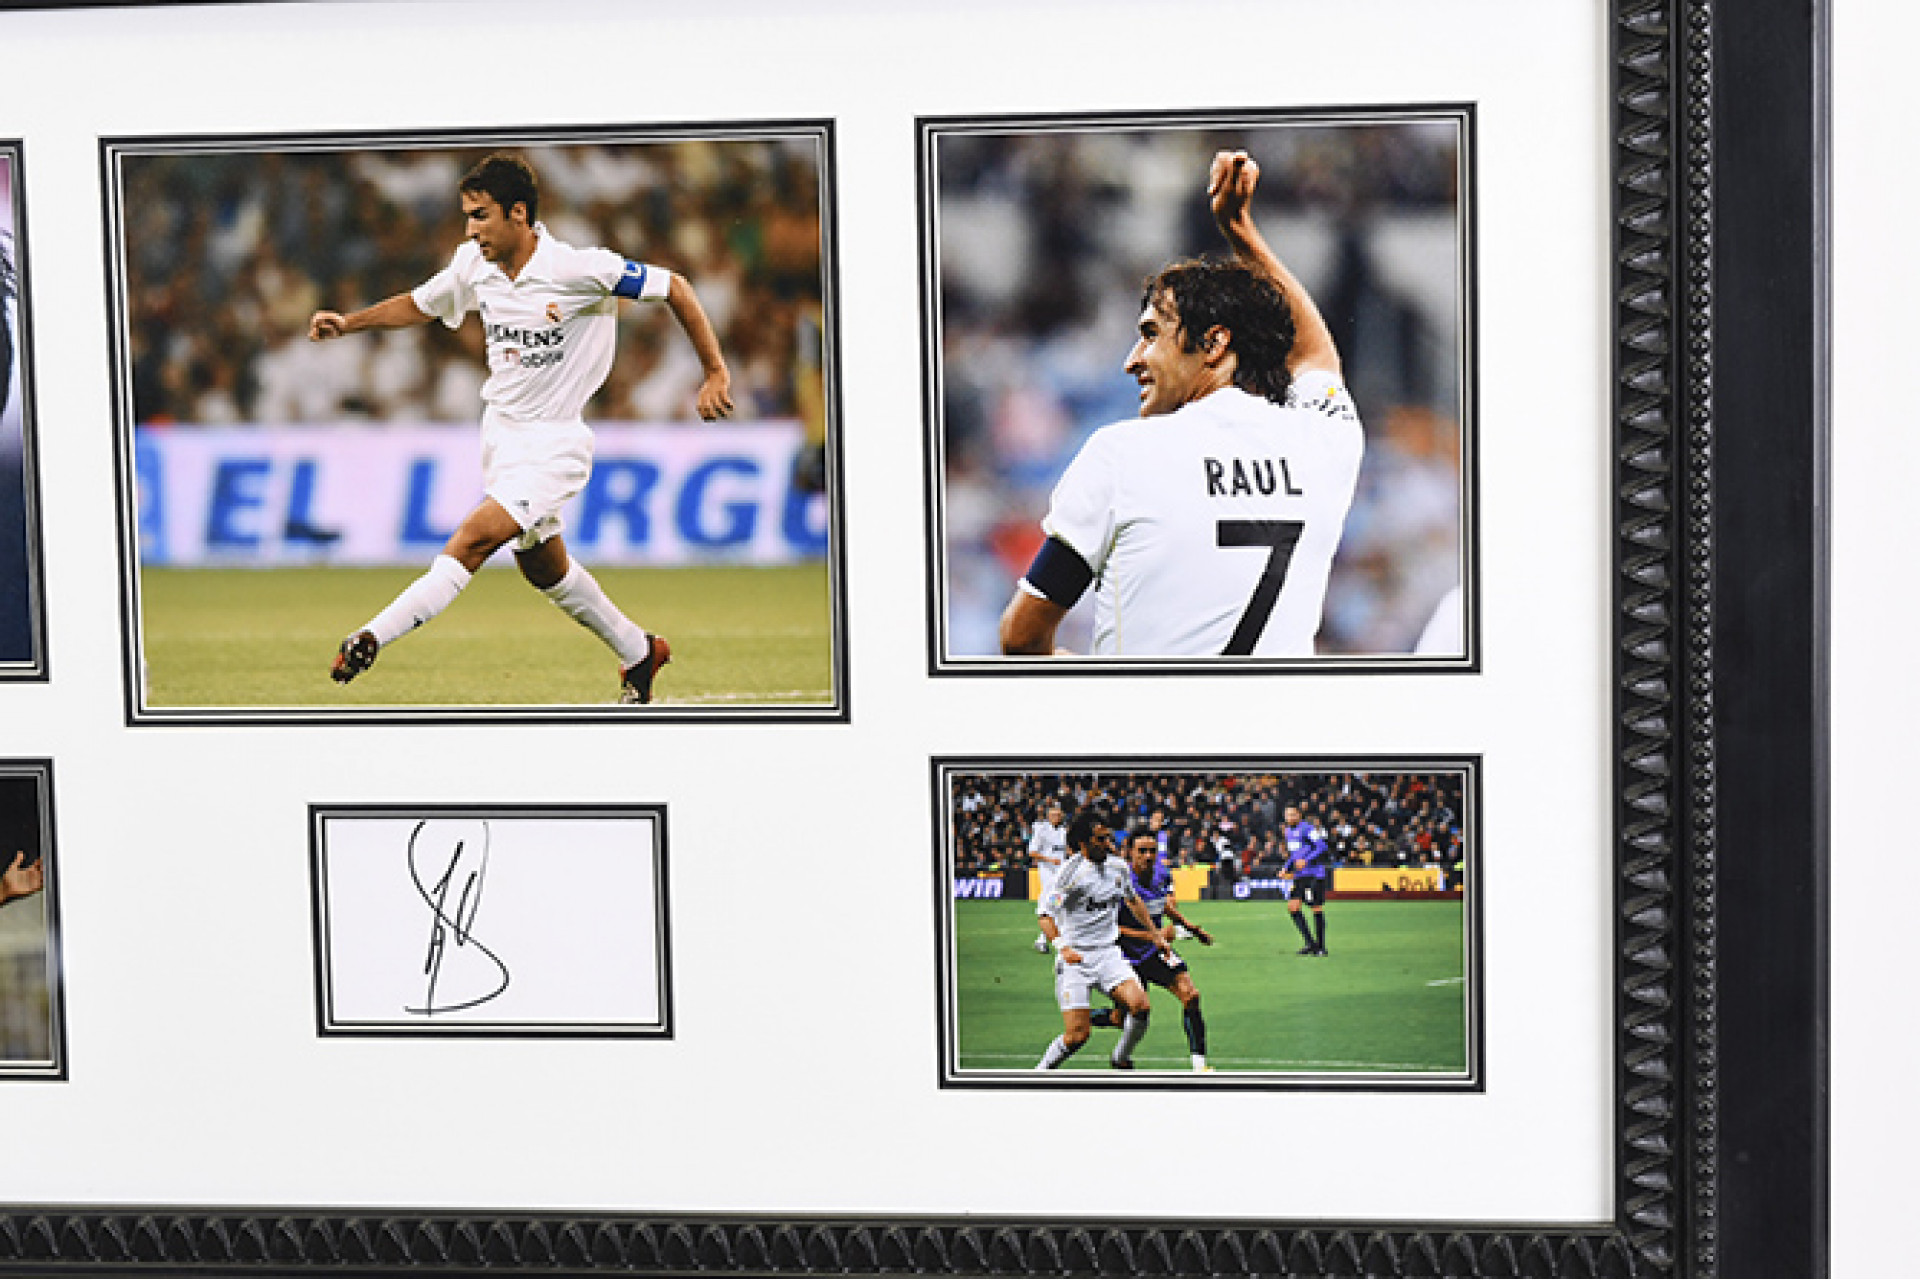 Raul Autograph / Photo Presentation